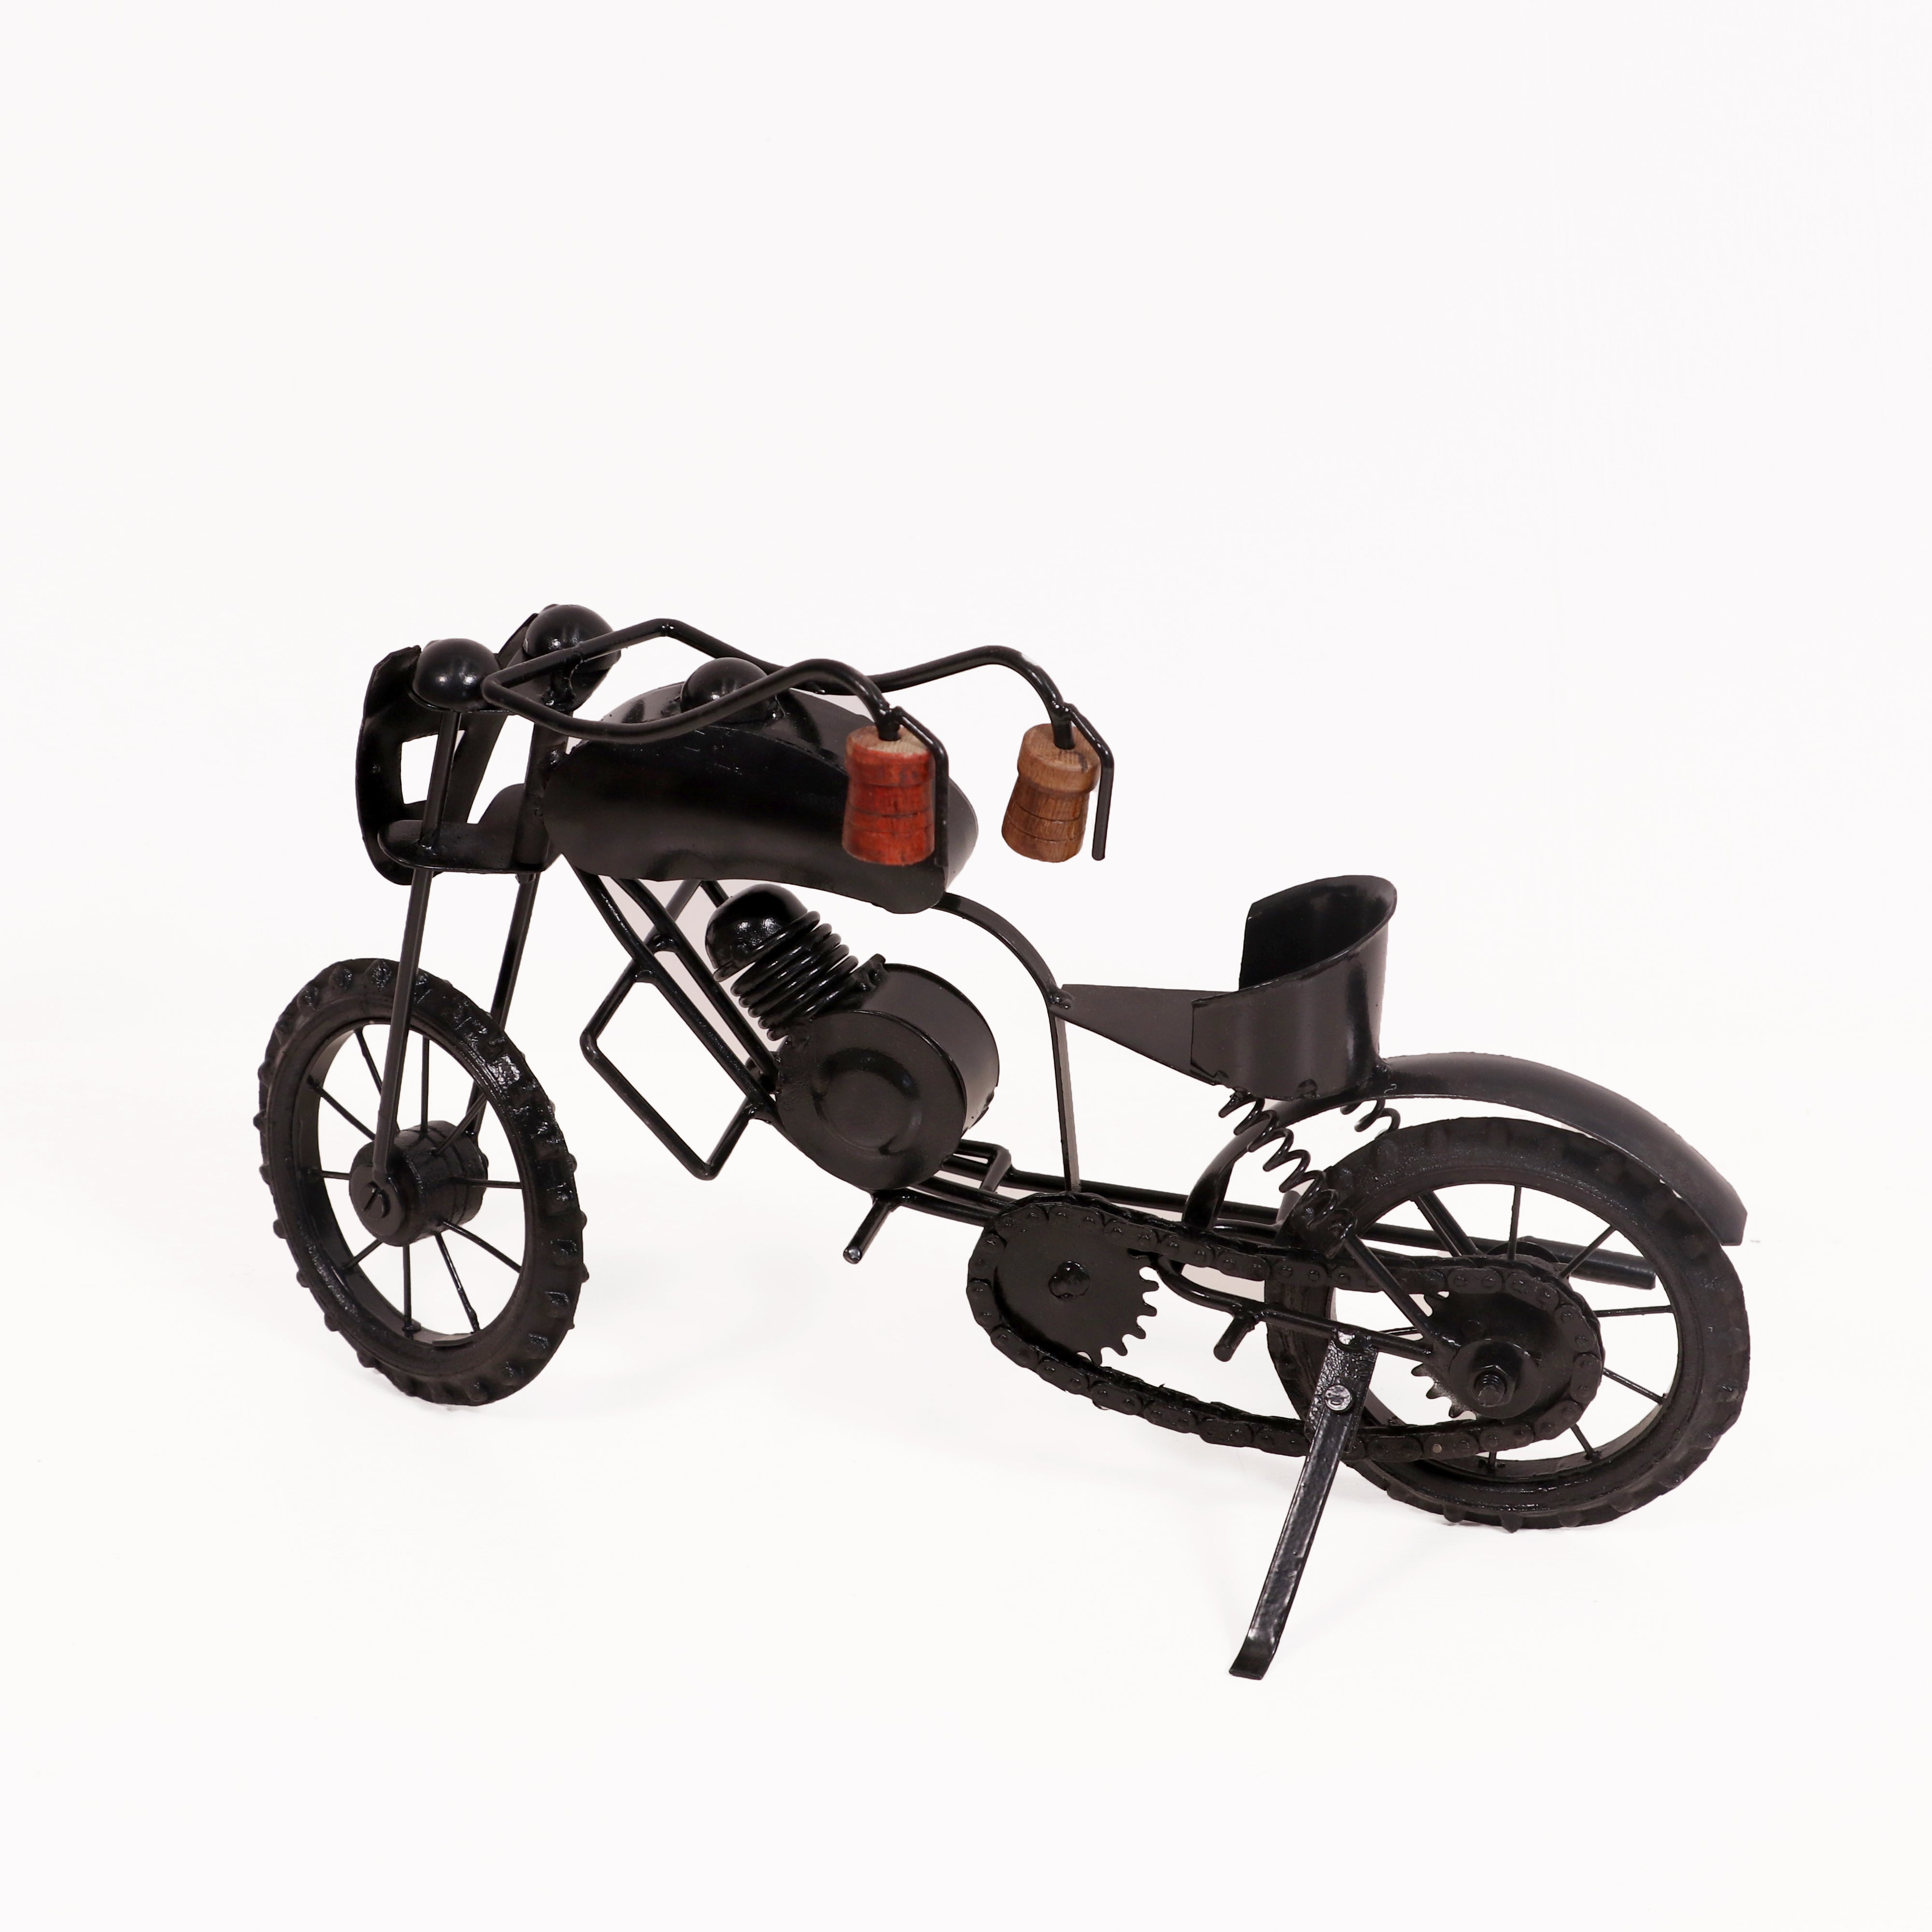 Metallic Miniature motorcycle inspired vehicle Vehicle figurine